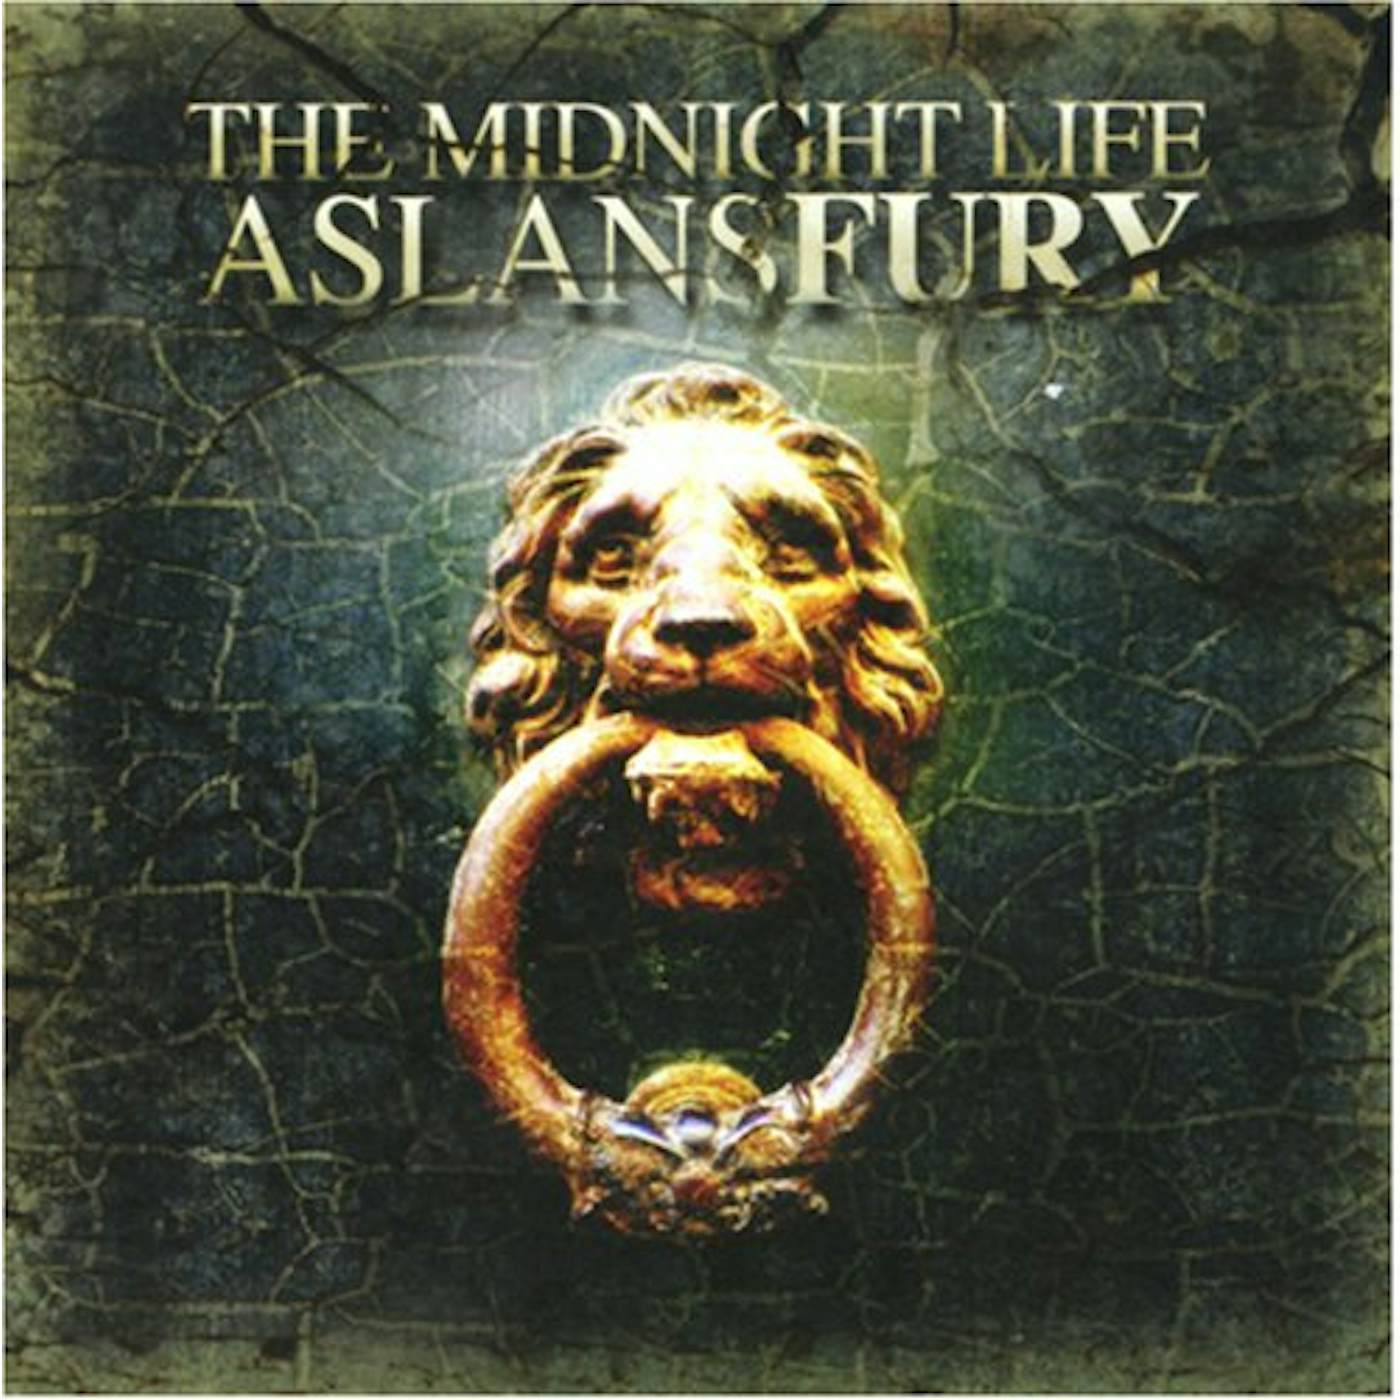 Midnight Life ASLAN'S FURY CD